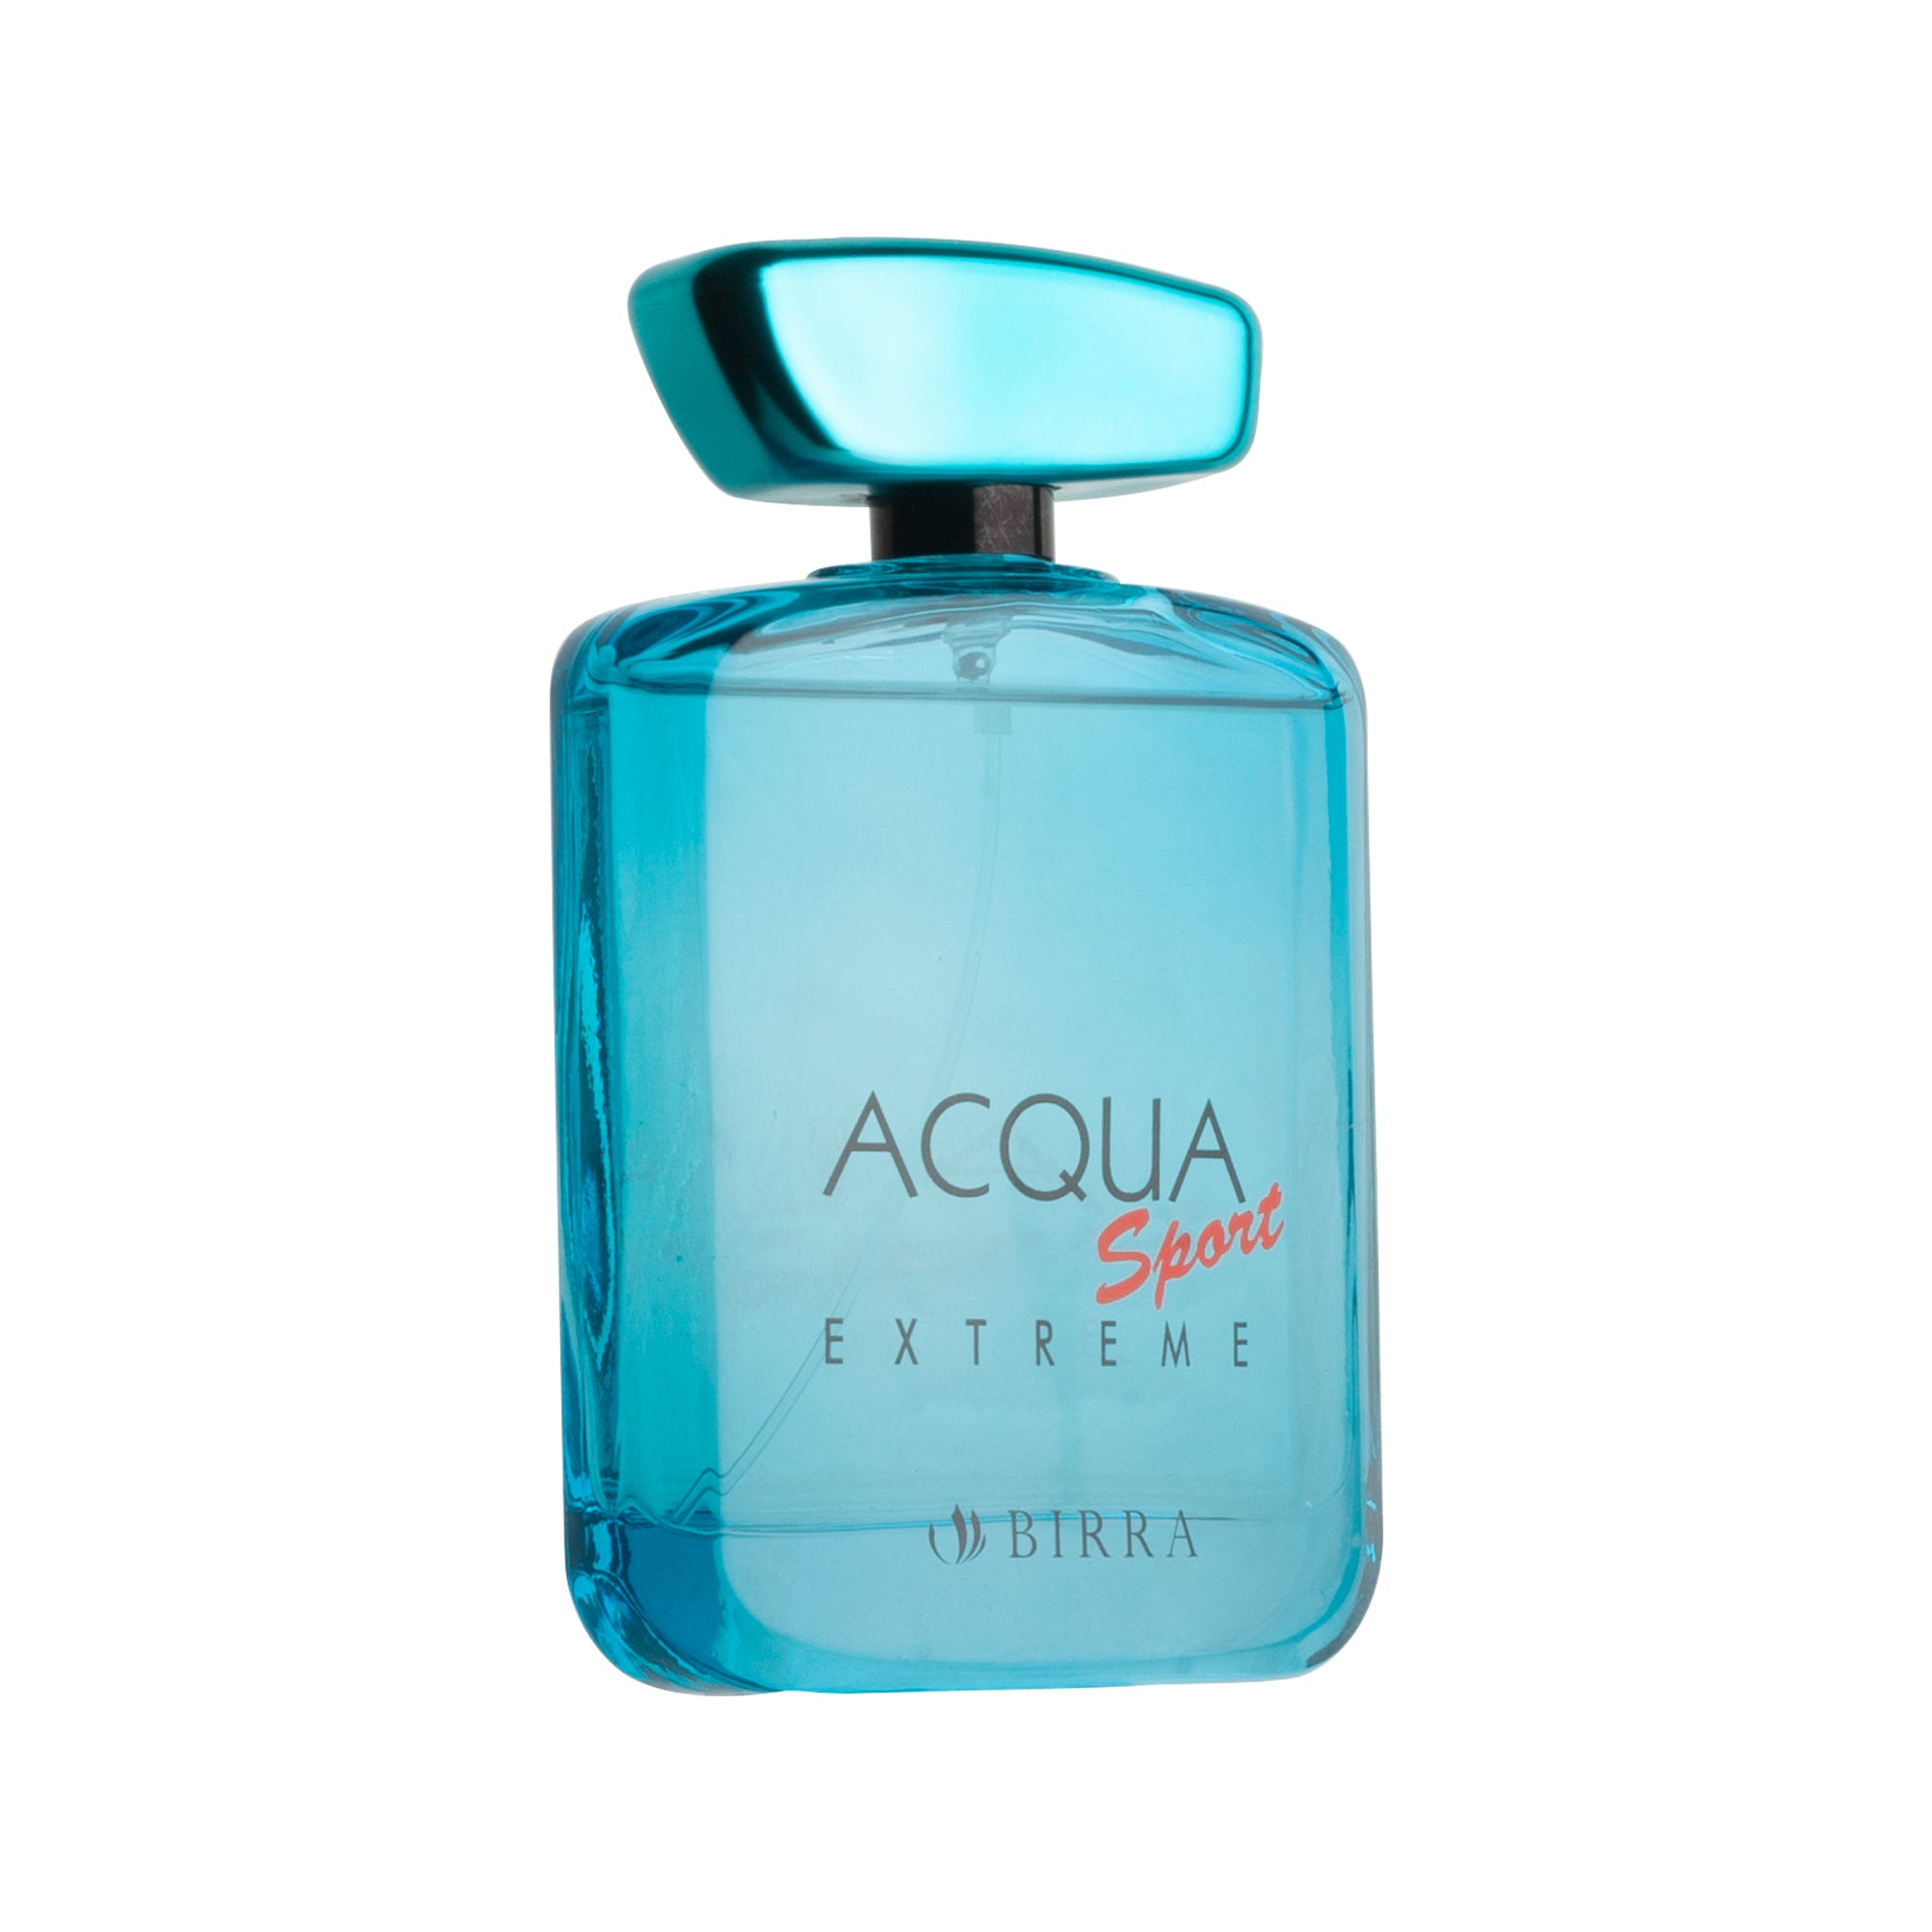 Acqua Sport Extreme EDP 120ml- Premium Perfume